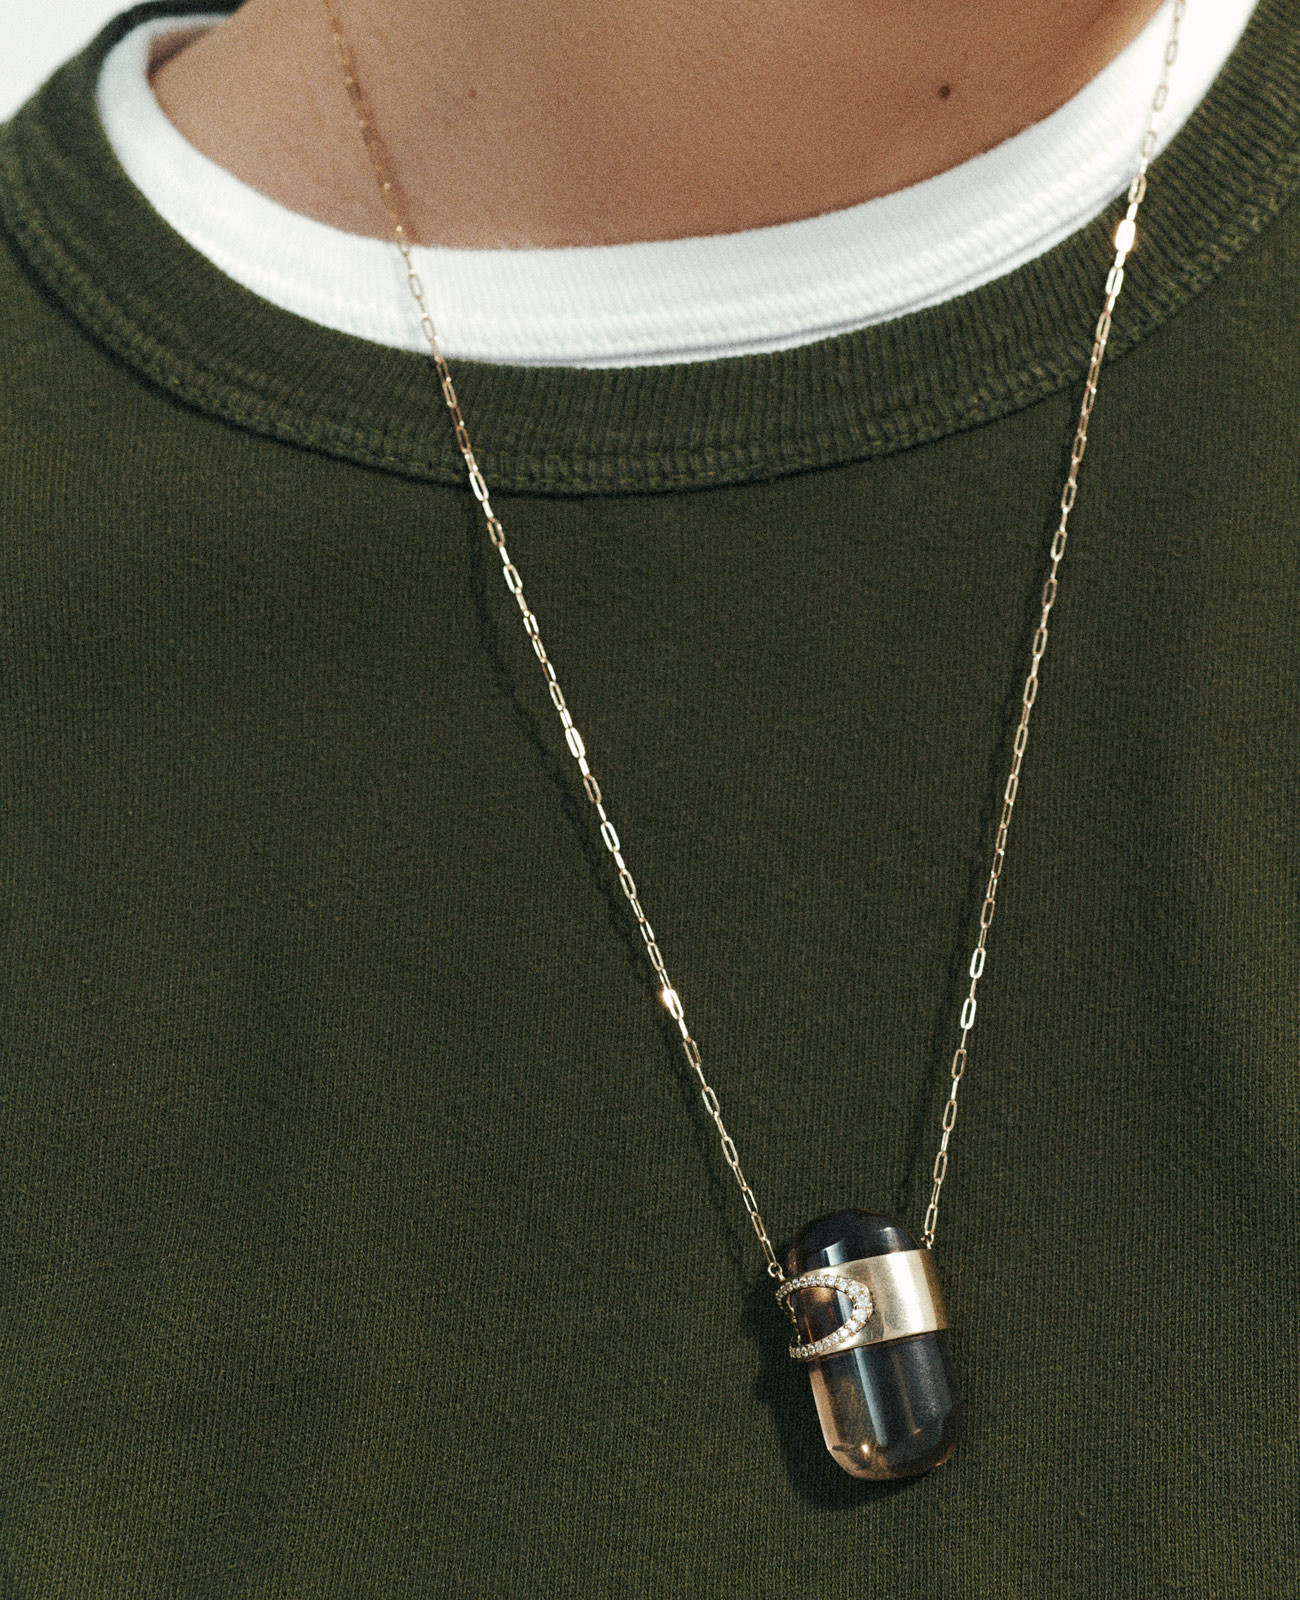 GIGI N°2 SMOKY QUARTZ necklace pascale monvoisin jewelry paris